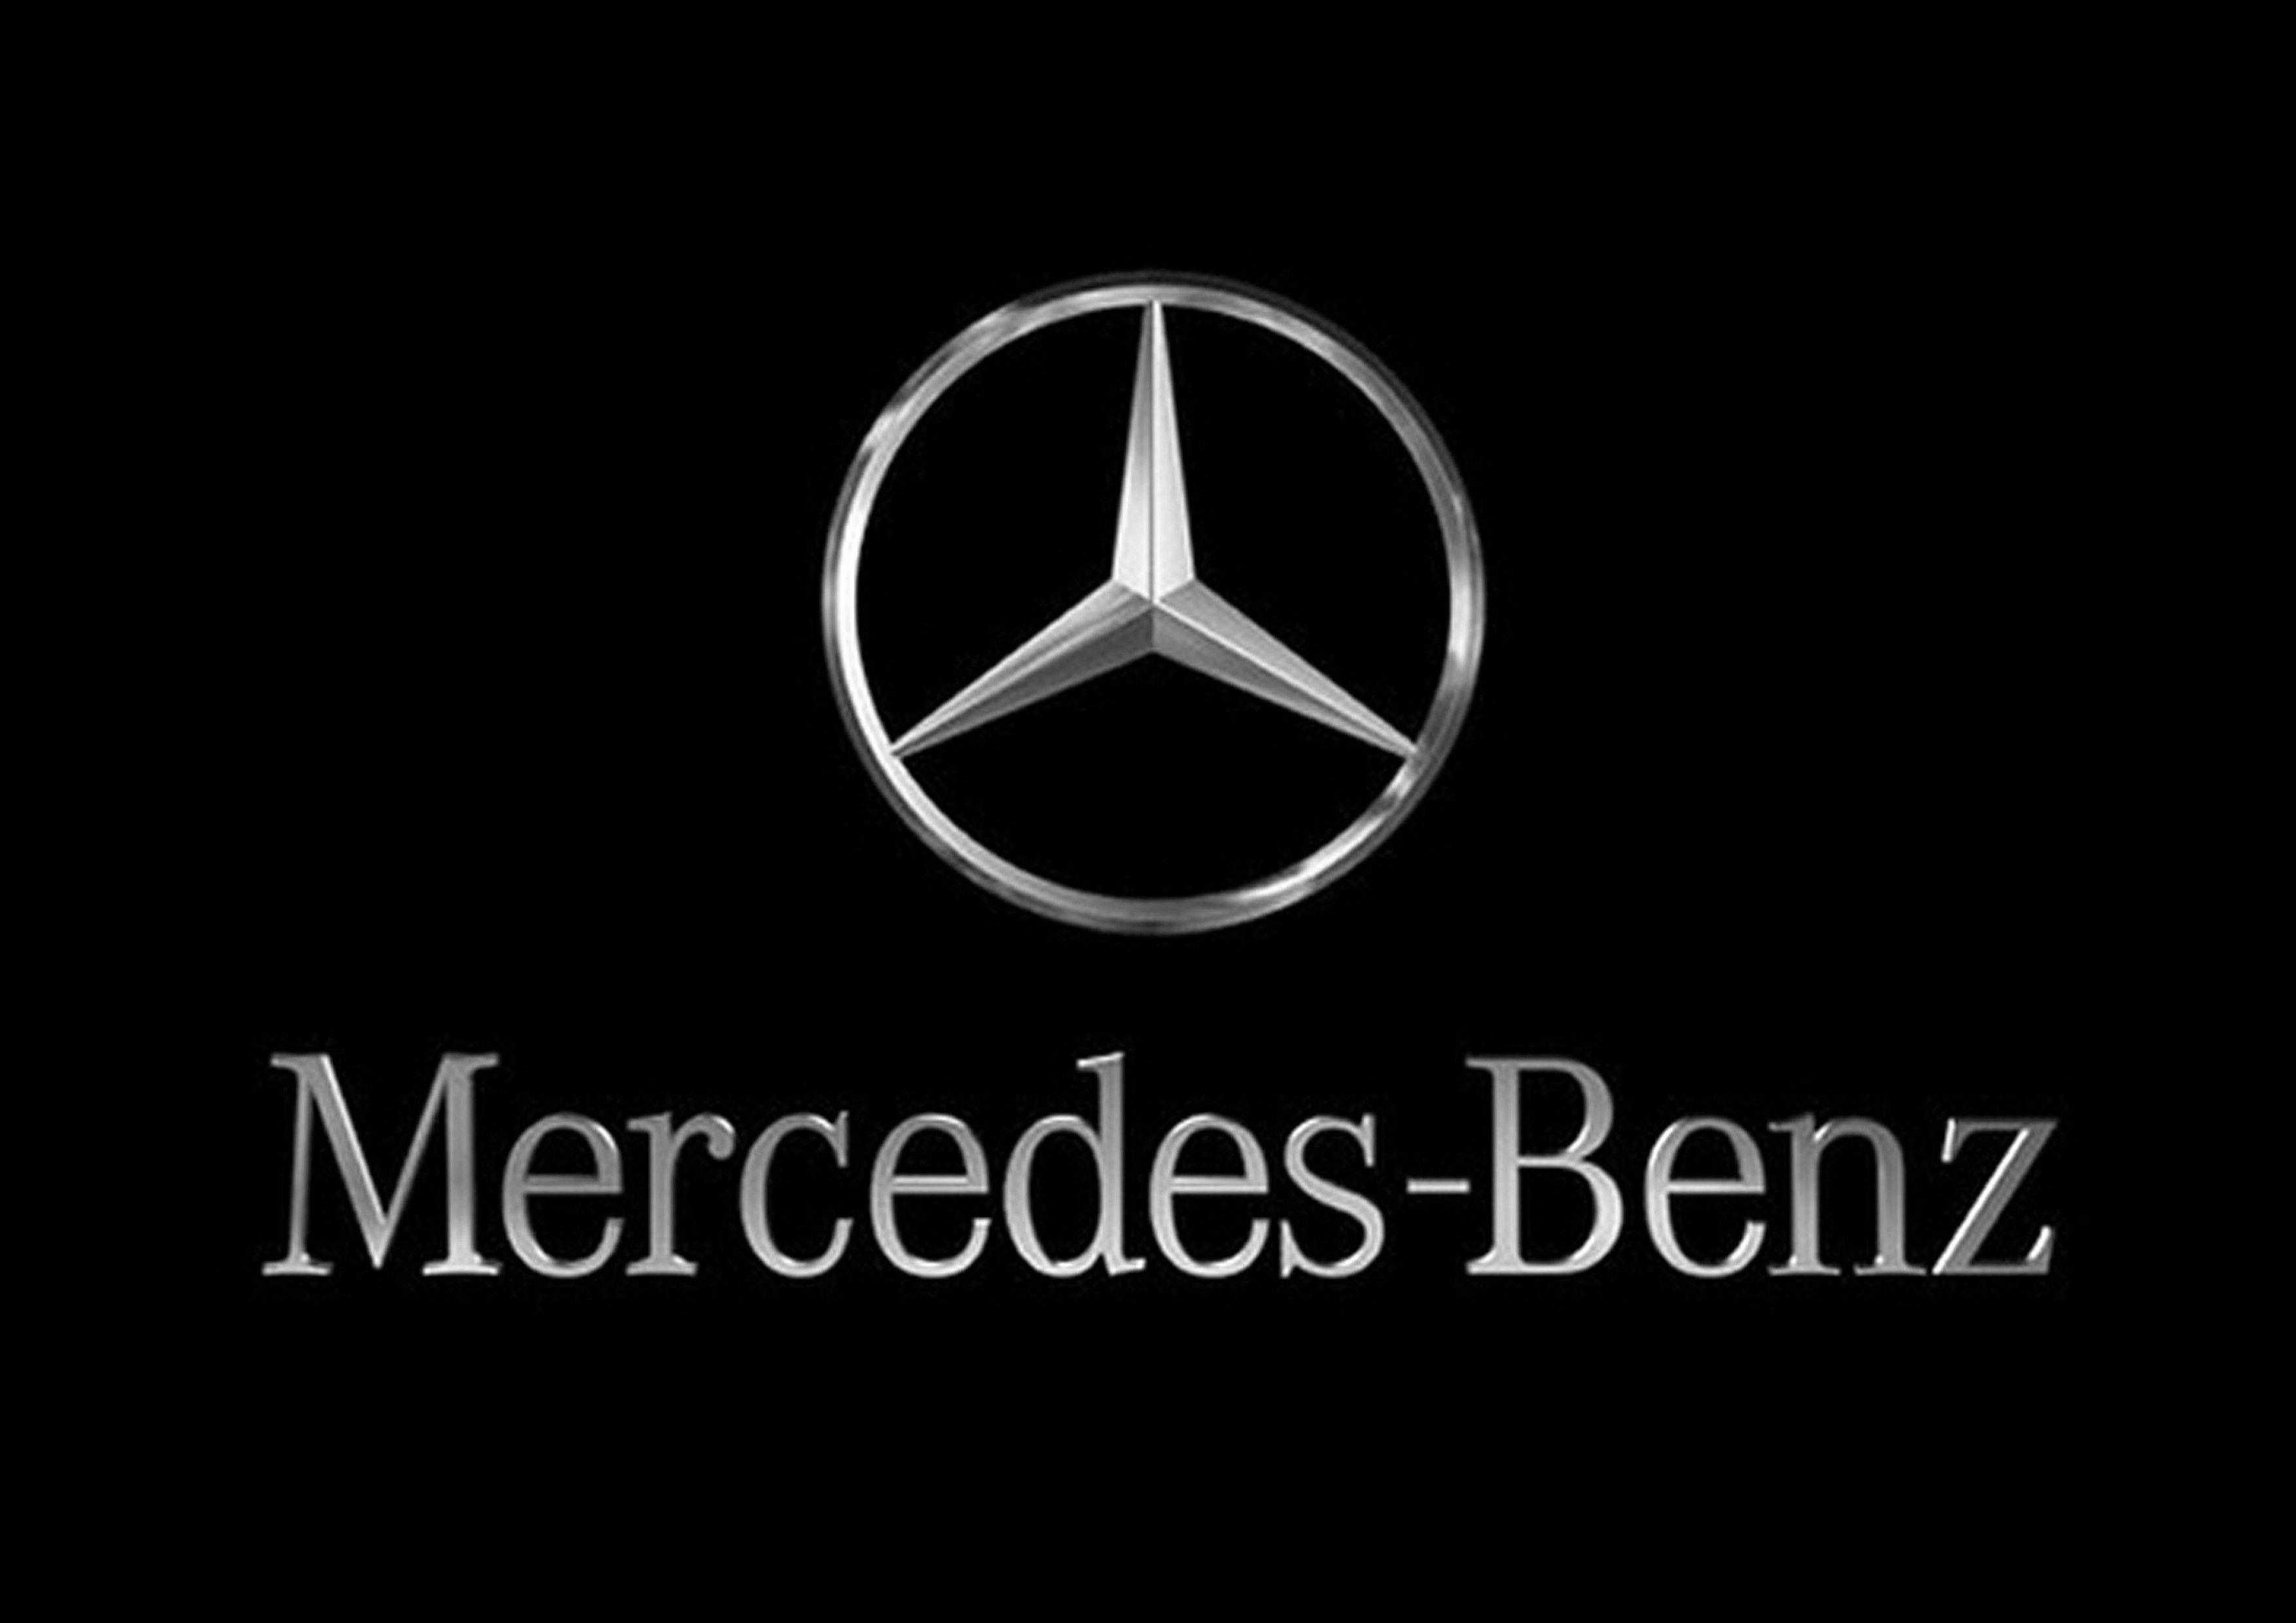 Benz Black Logo - Mercedes Benz Logo Wallpaper, Picture, Image